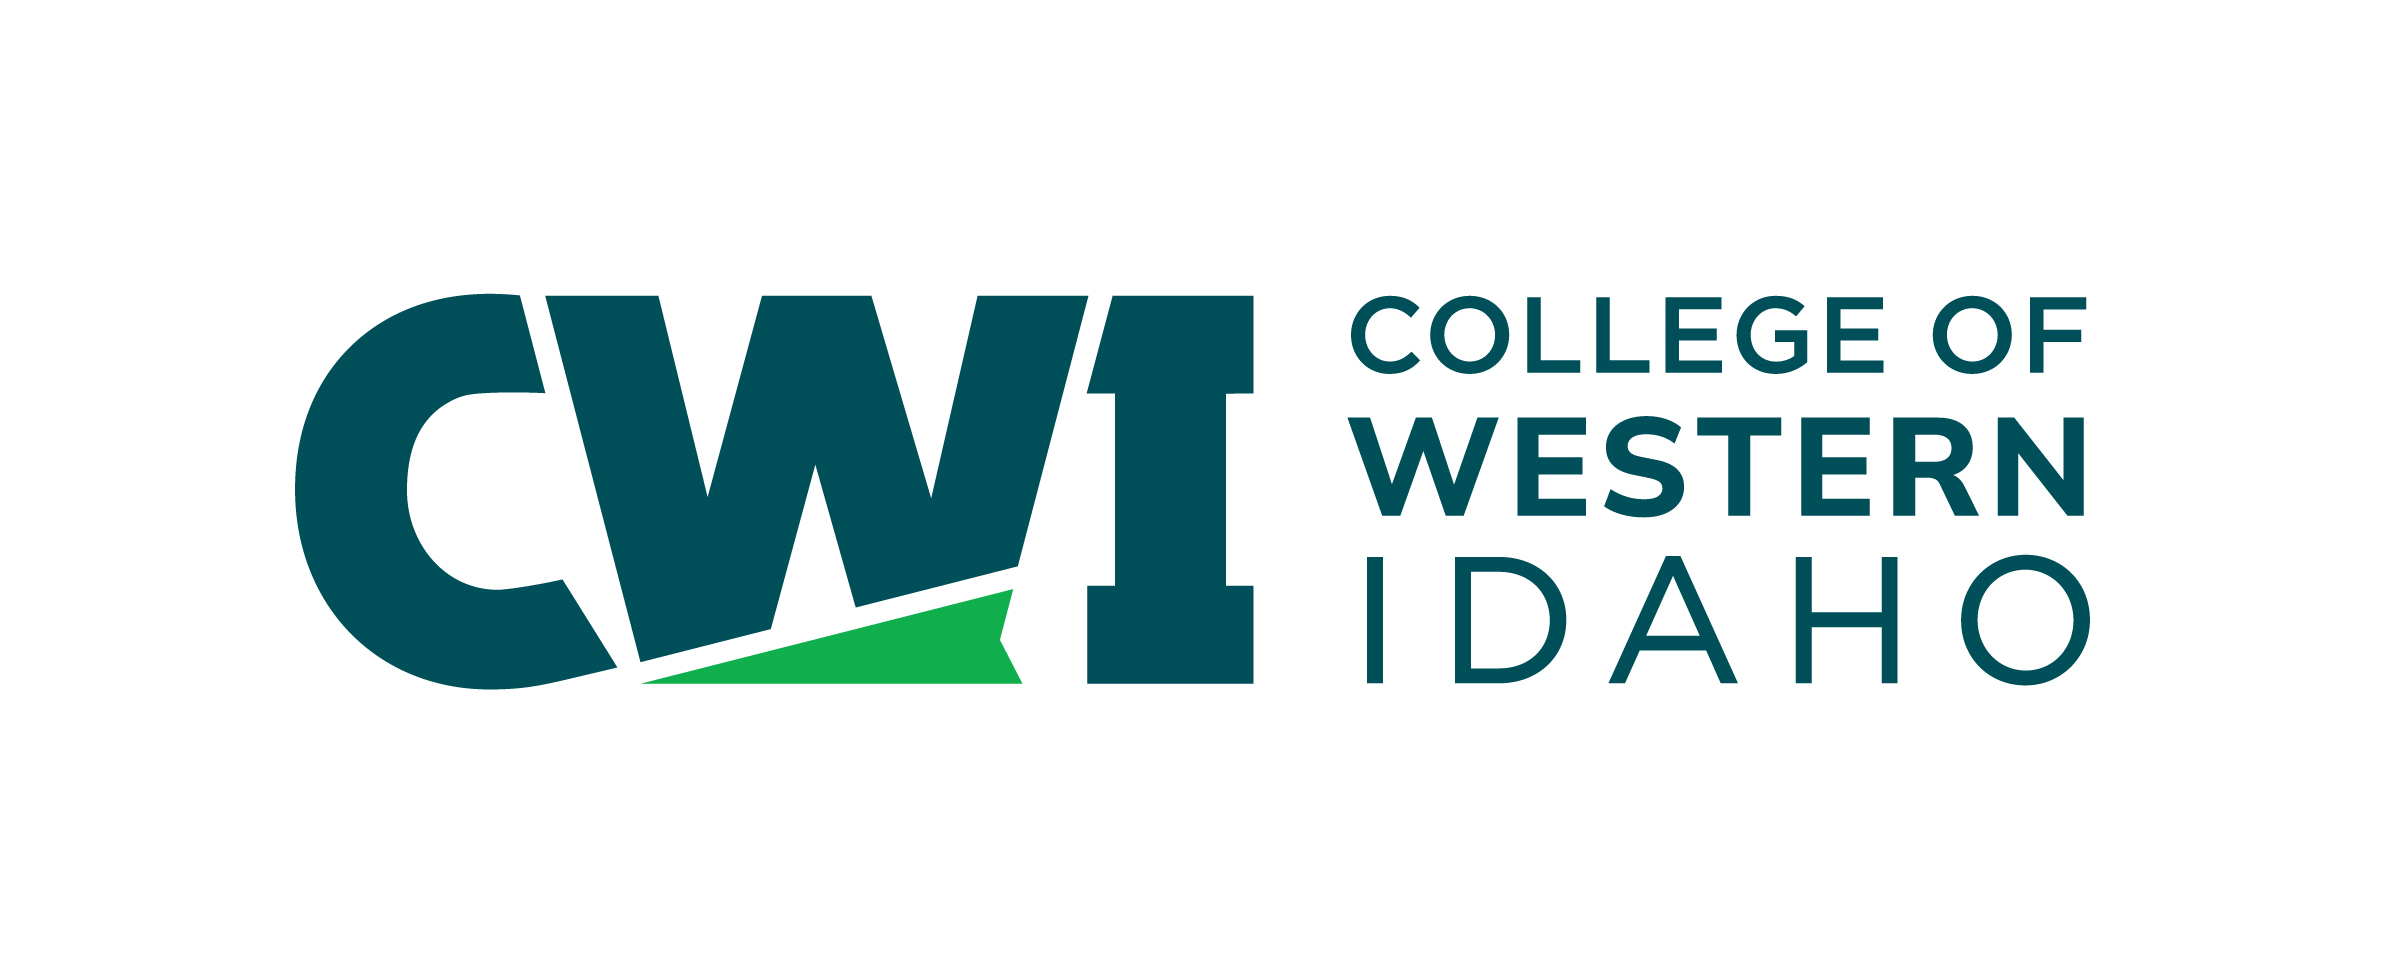 College of Western Idaho Website